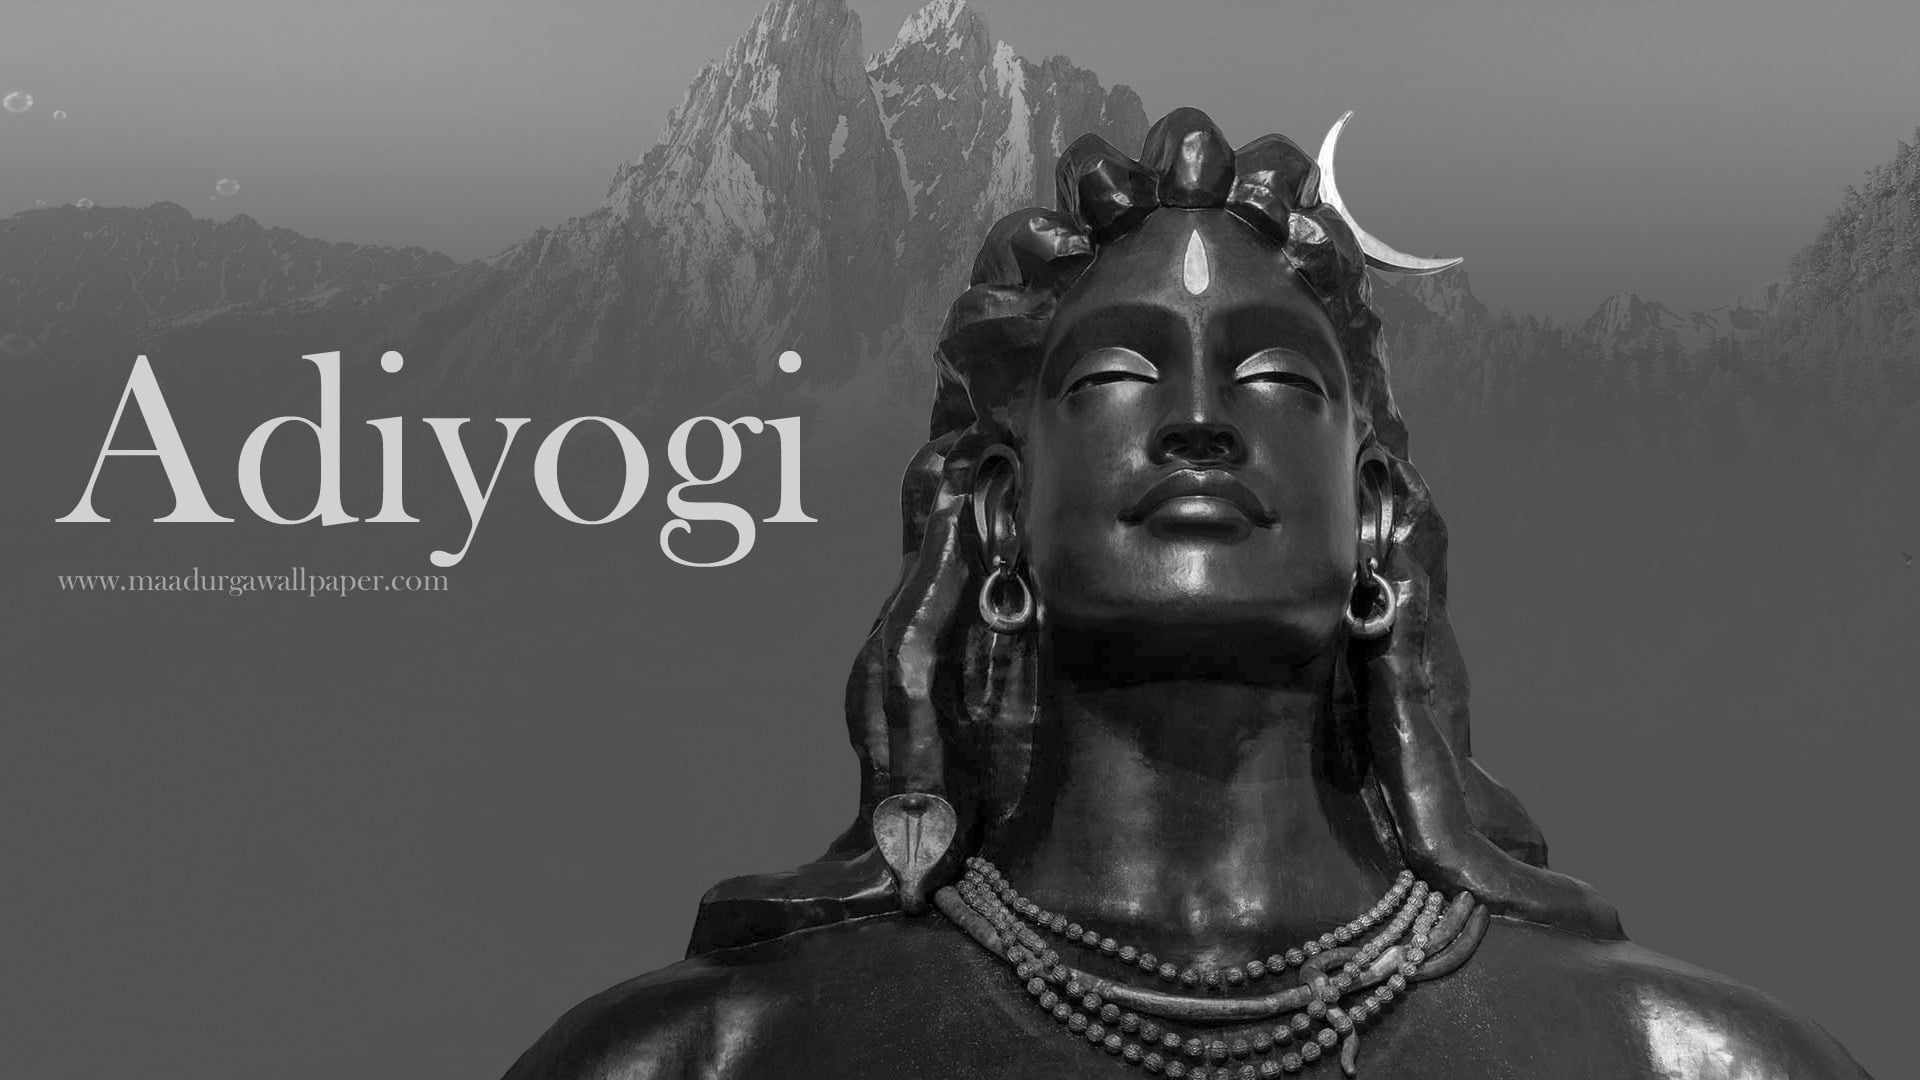 adiyogi Shiva tantra press tantraesdevocion inciensoshop blog de tantra Shivaismo de cachemira advaita Vedanta y espiritualidad hindu